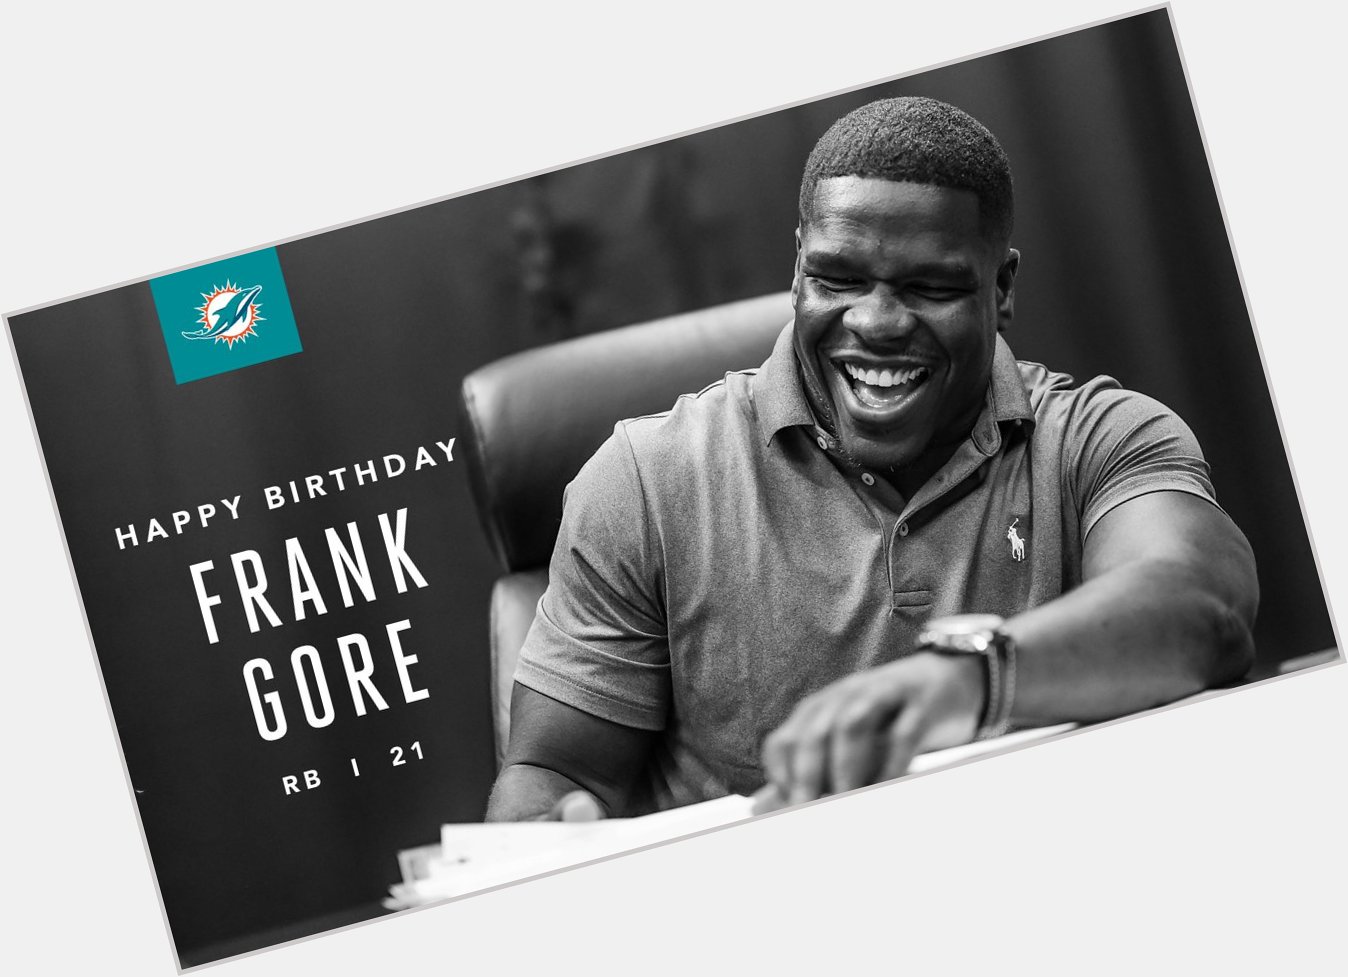  Happy Birthday to Frank Gore! 